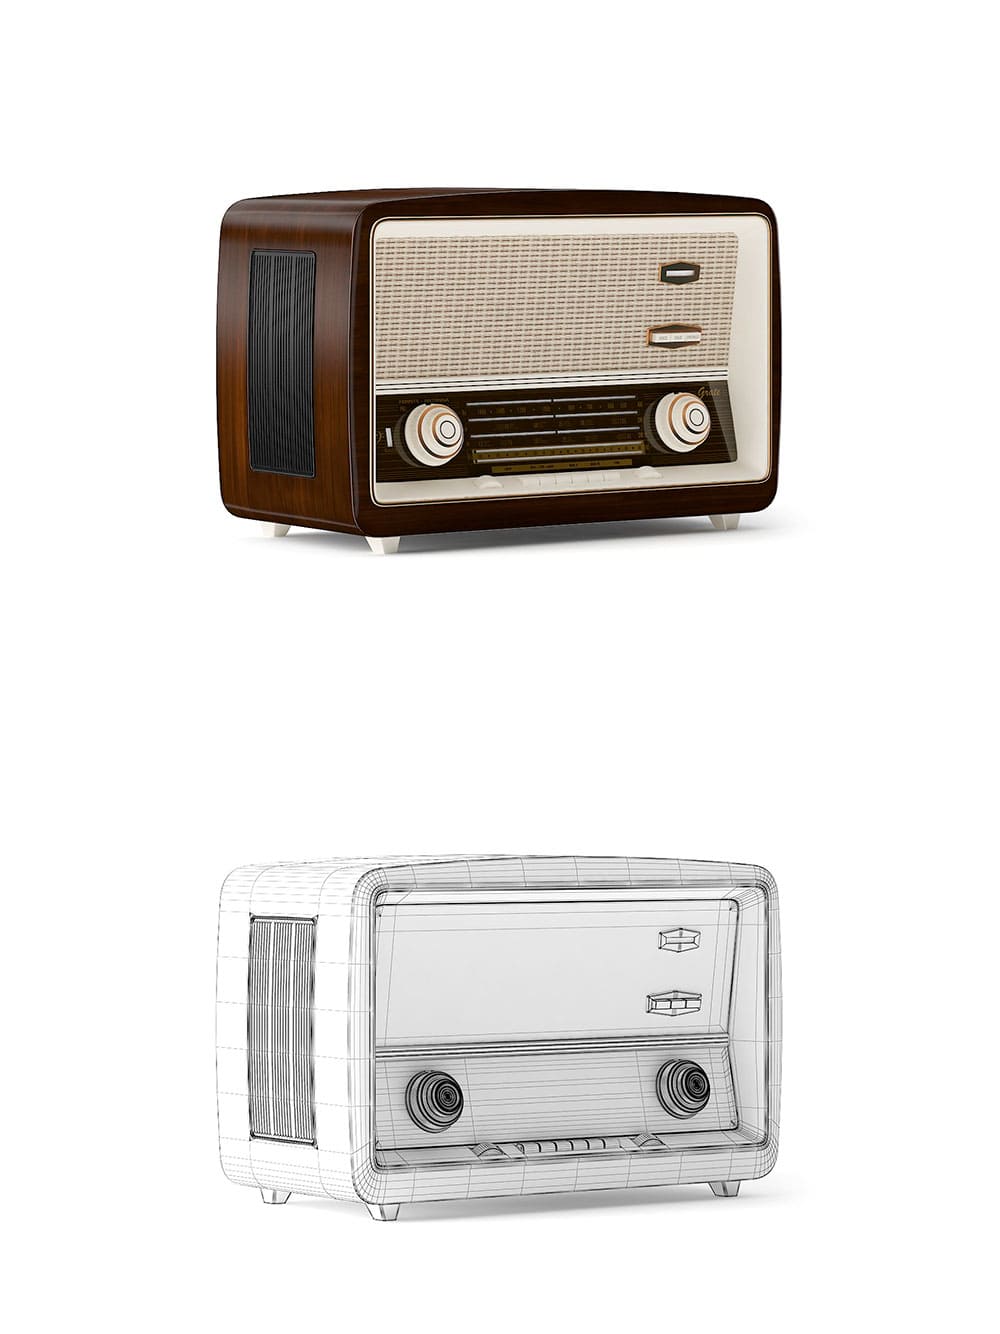 Antique radio, picture for pinterest.